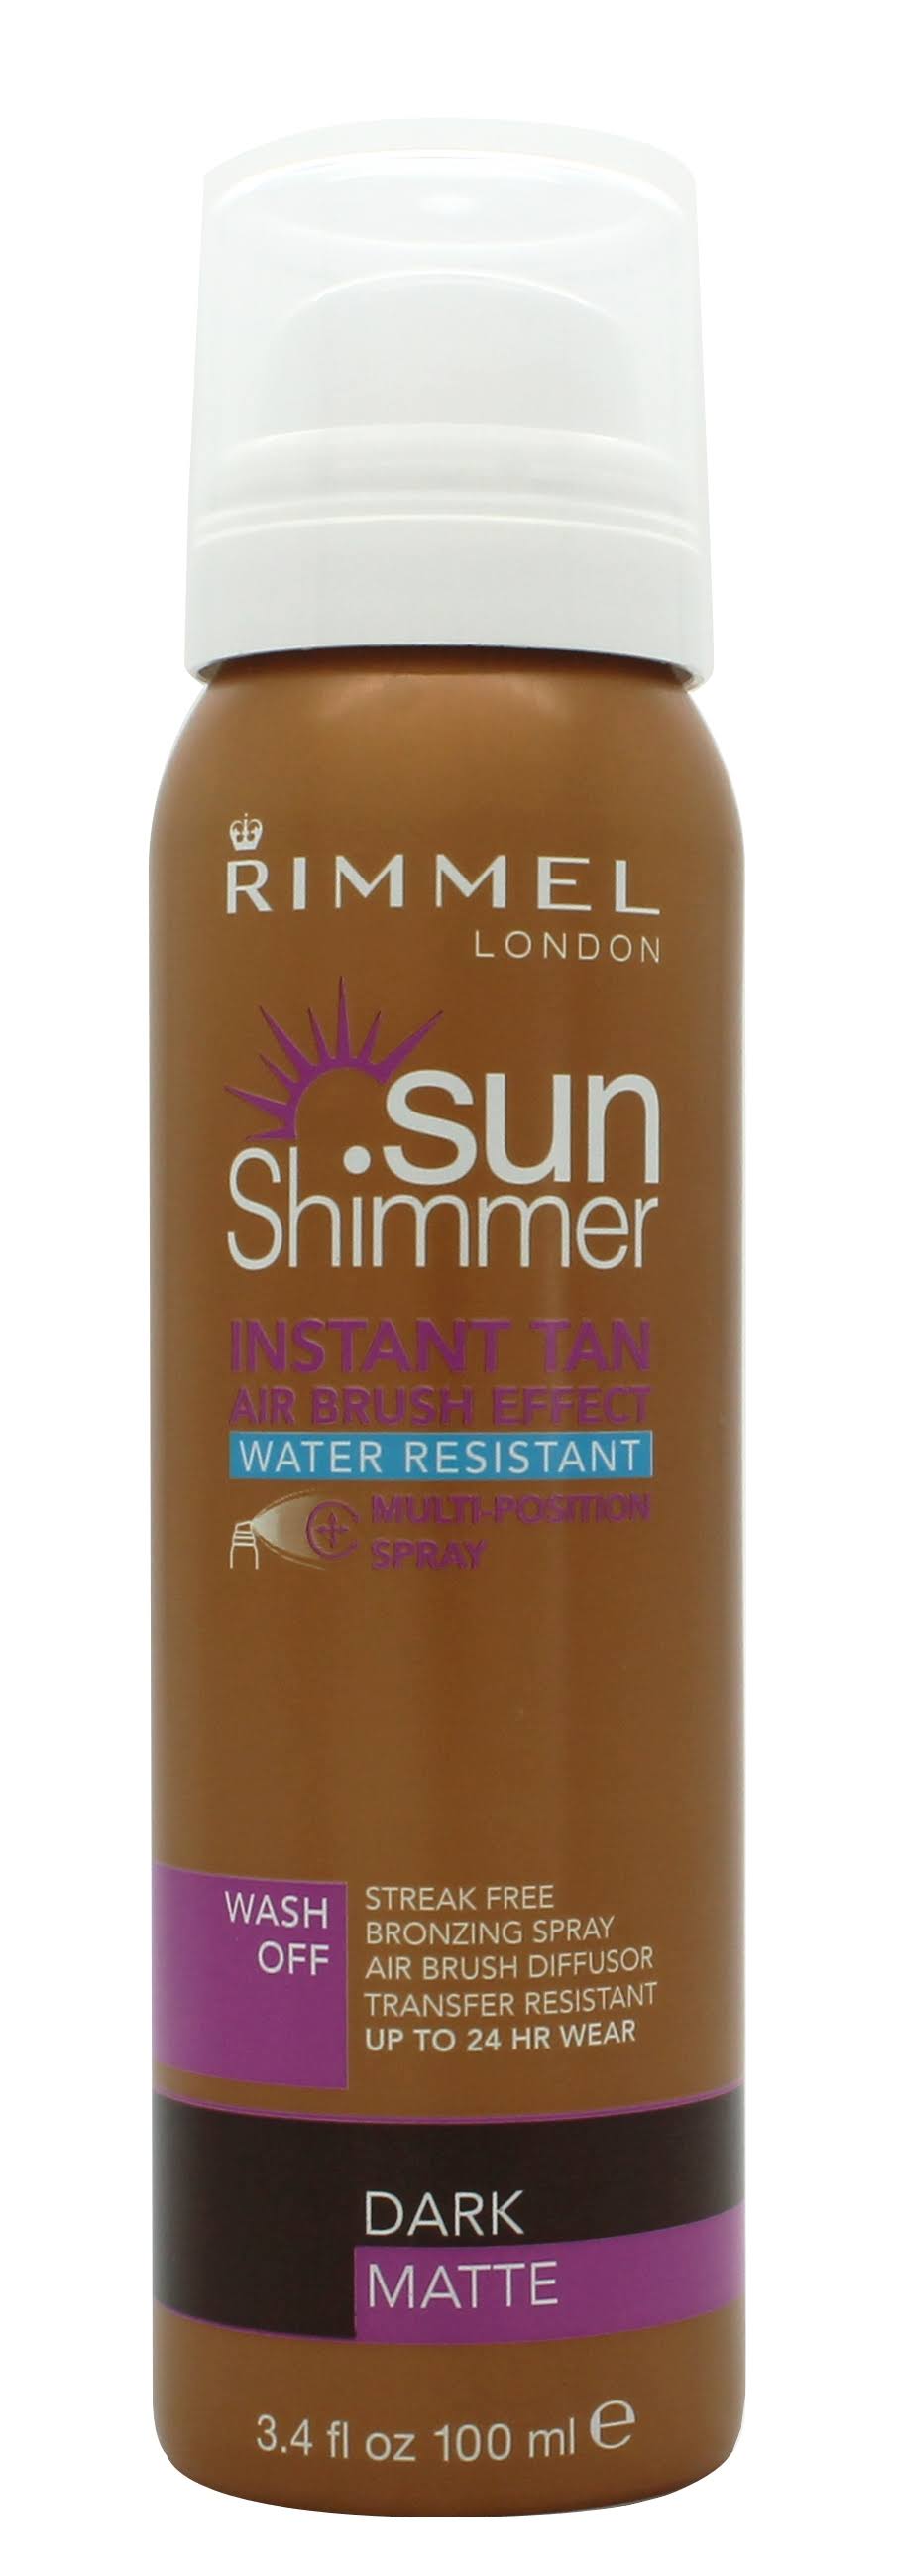 Rimmel Sun Shimmer Water Resistant Instant Tan Bronzing Spray - Dark Matte, 100ml